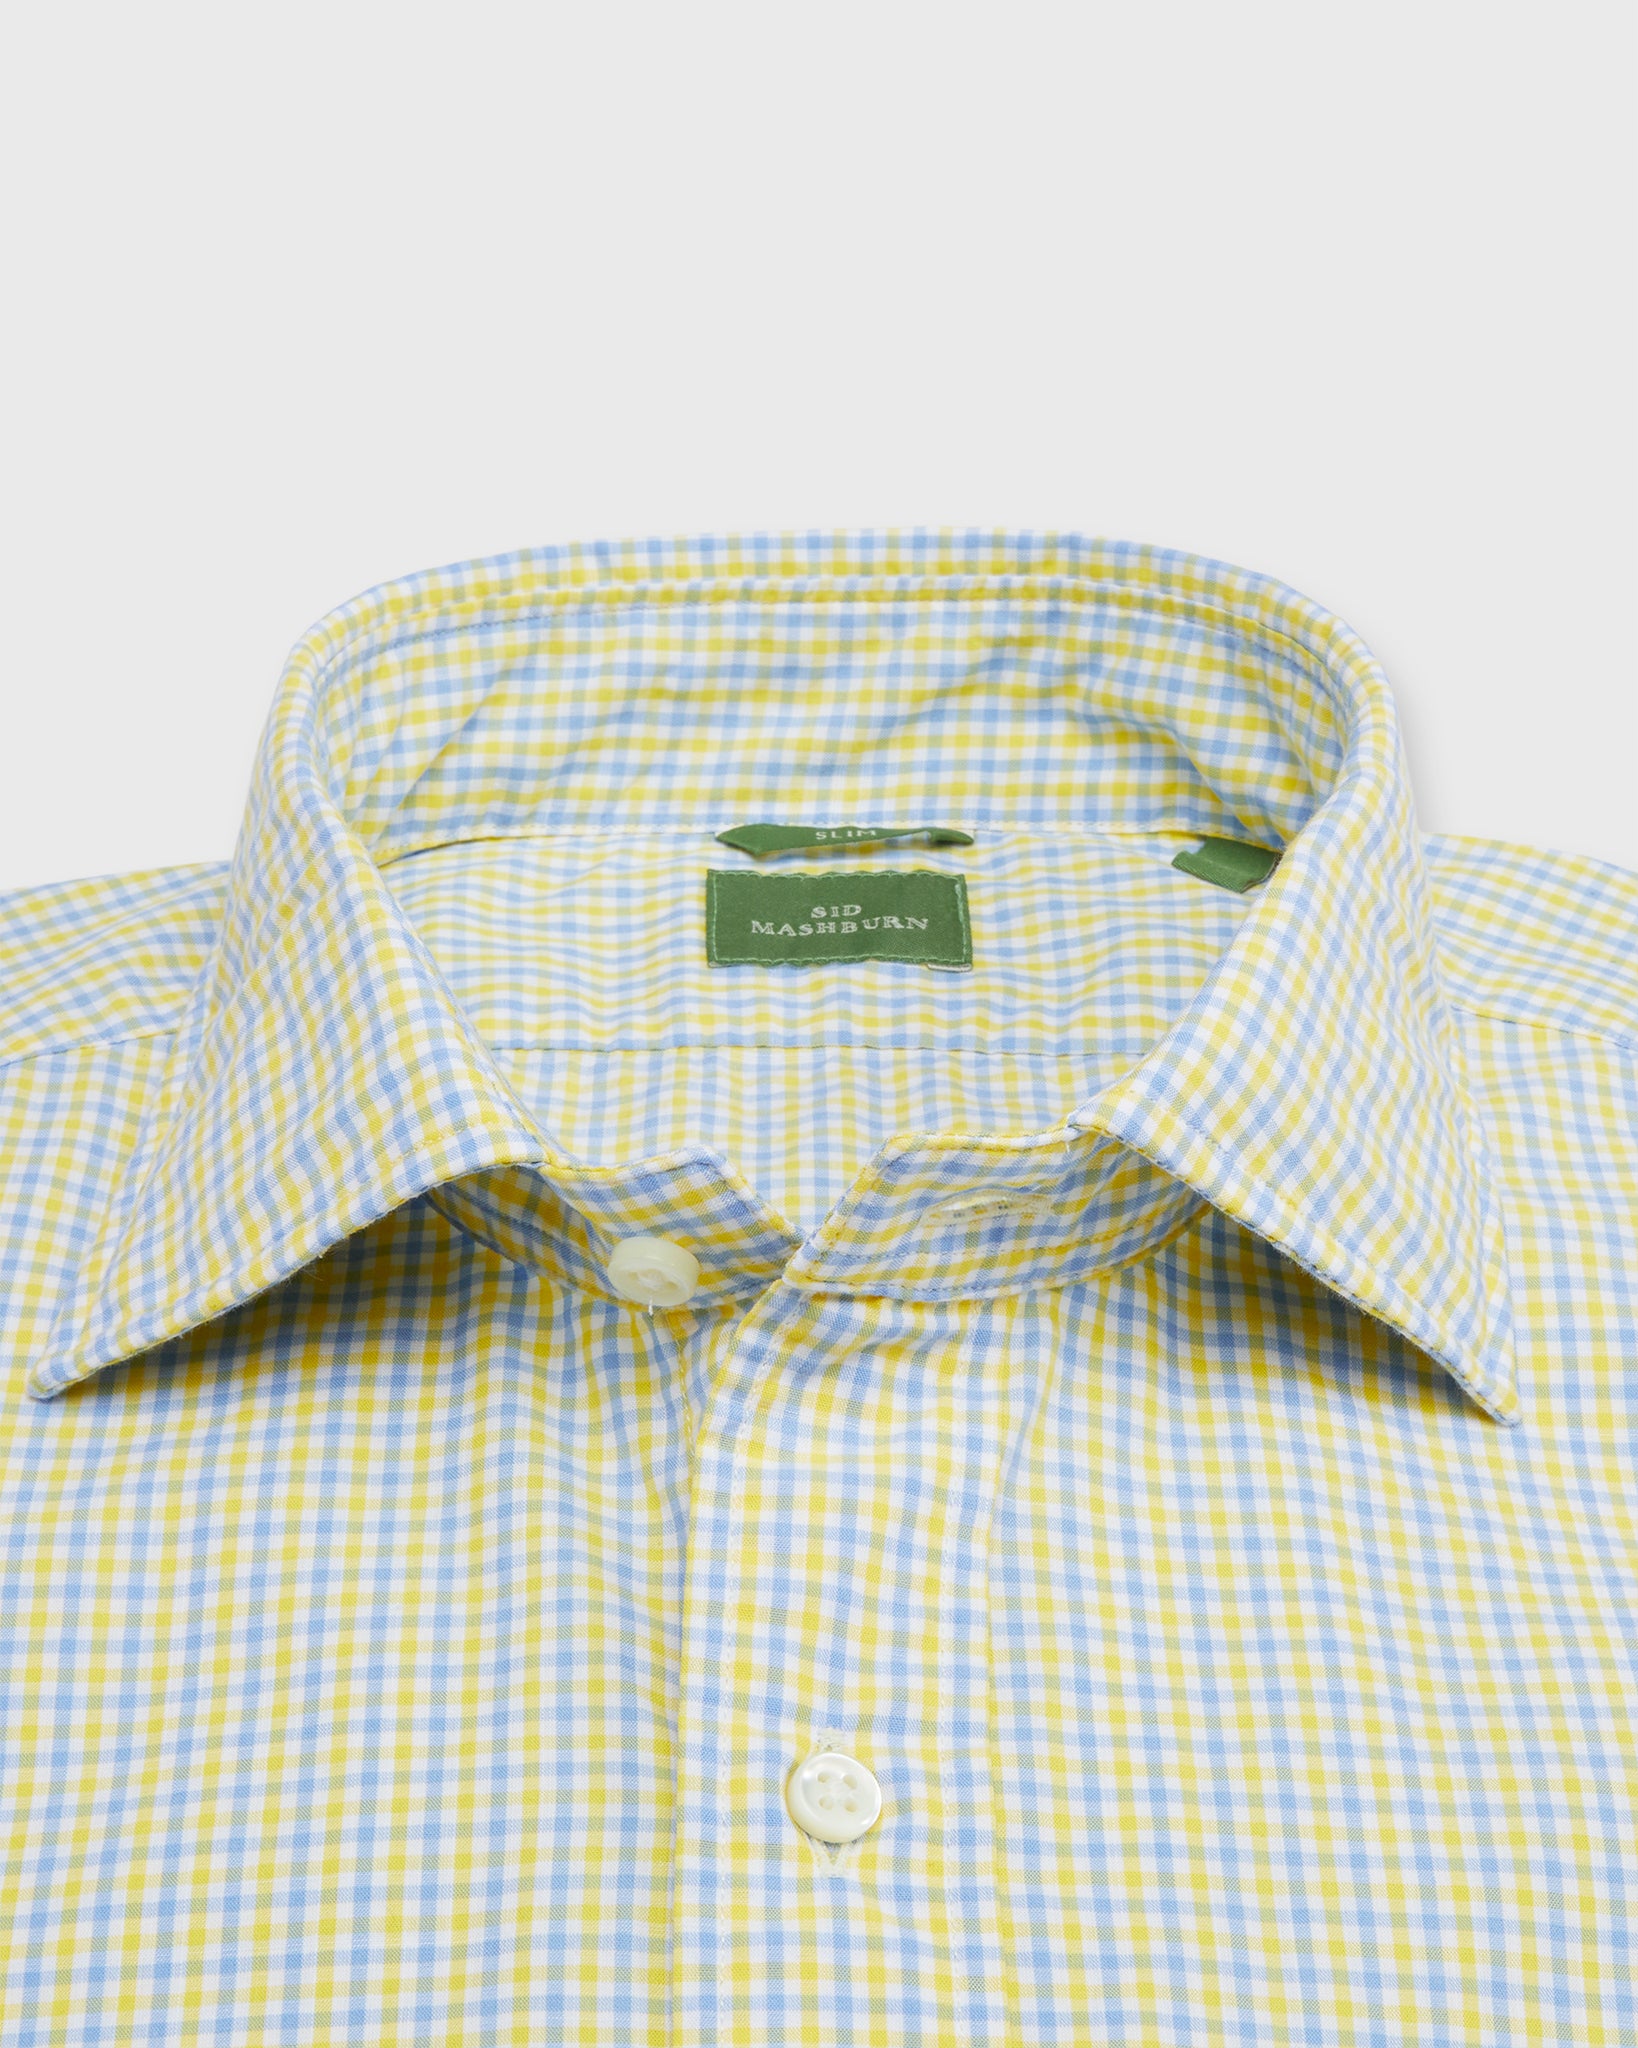 Slim-Fit Spread Collar Sport Shirt in Lemon/Periwinkle Tattersall Popl ...